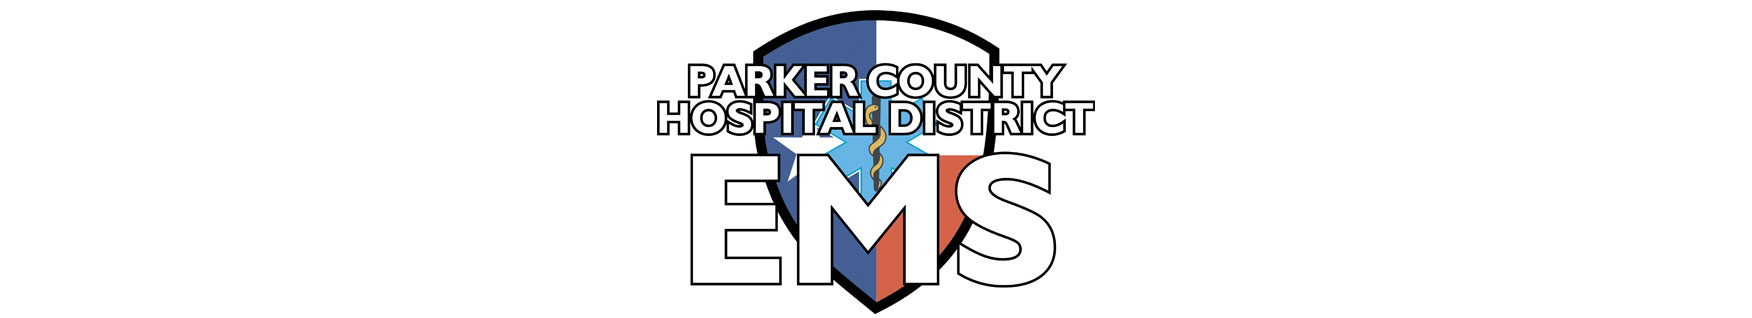 PARKER COUNTY HOSPITAL DISTRICT
EMS